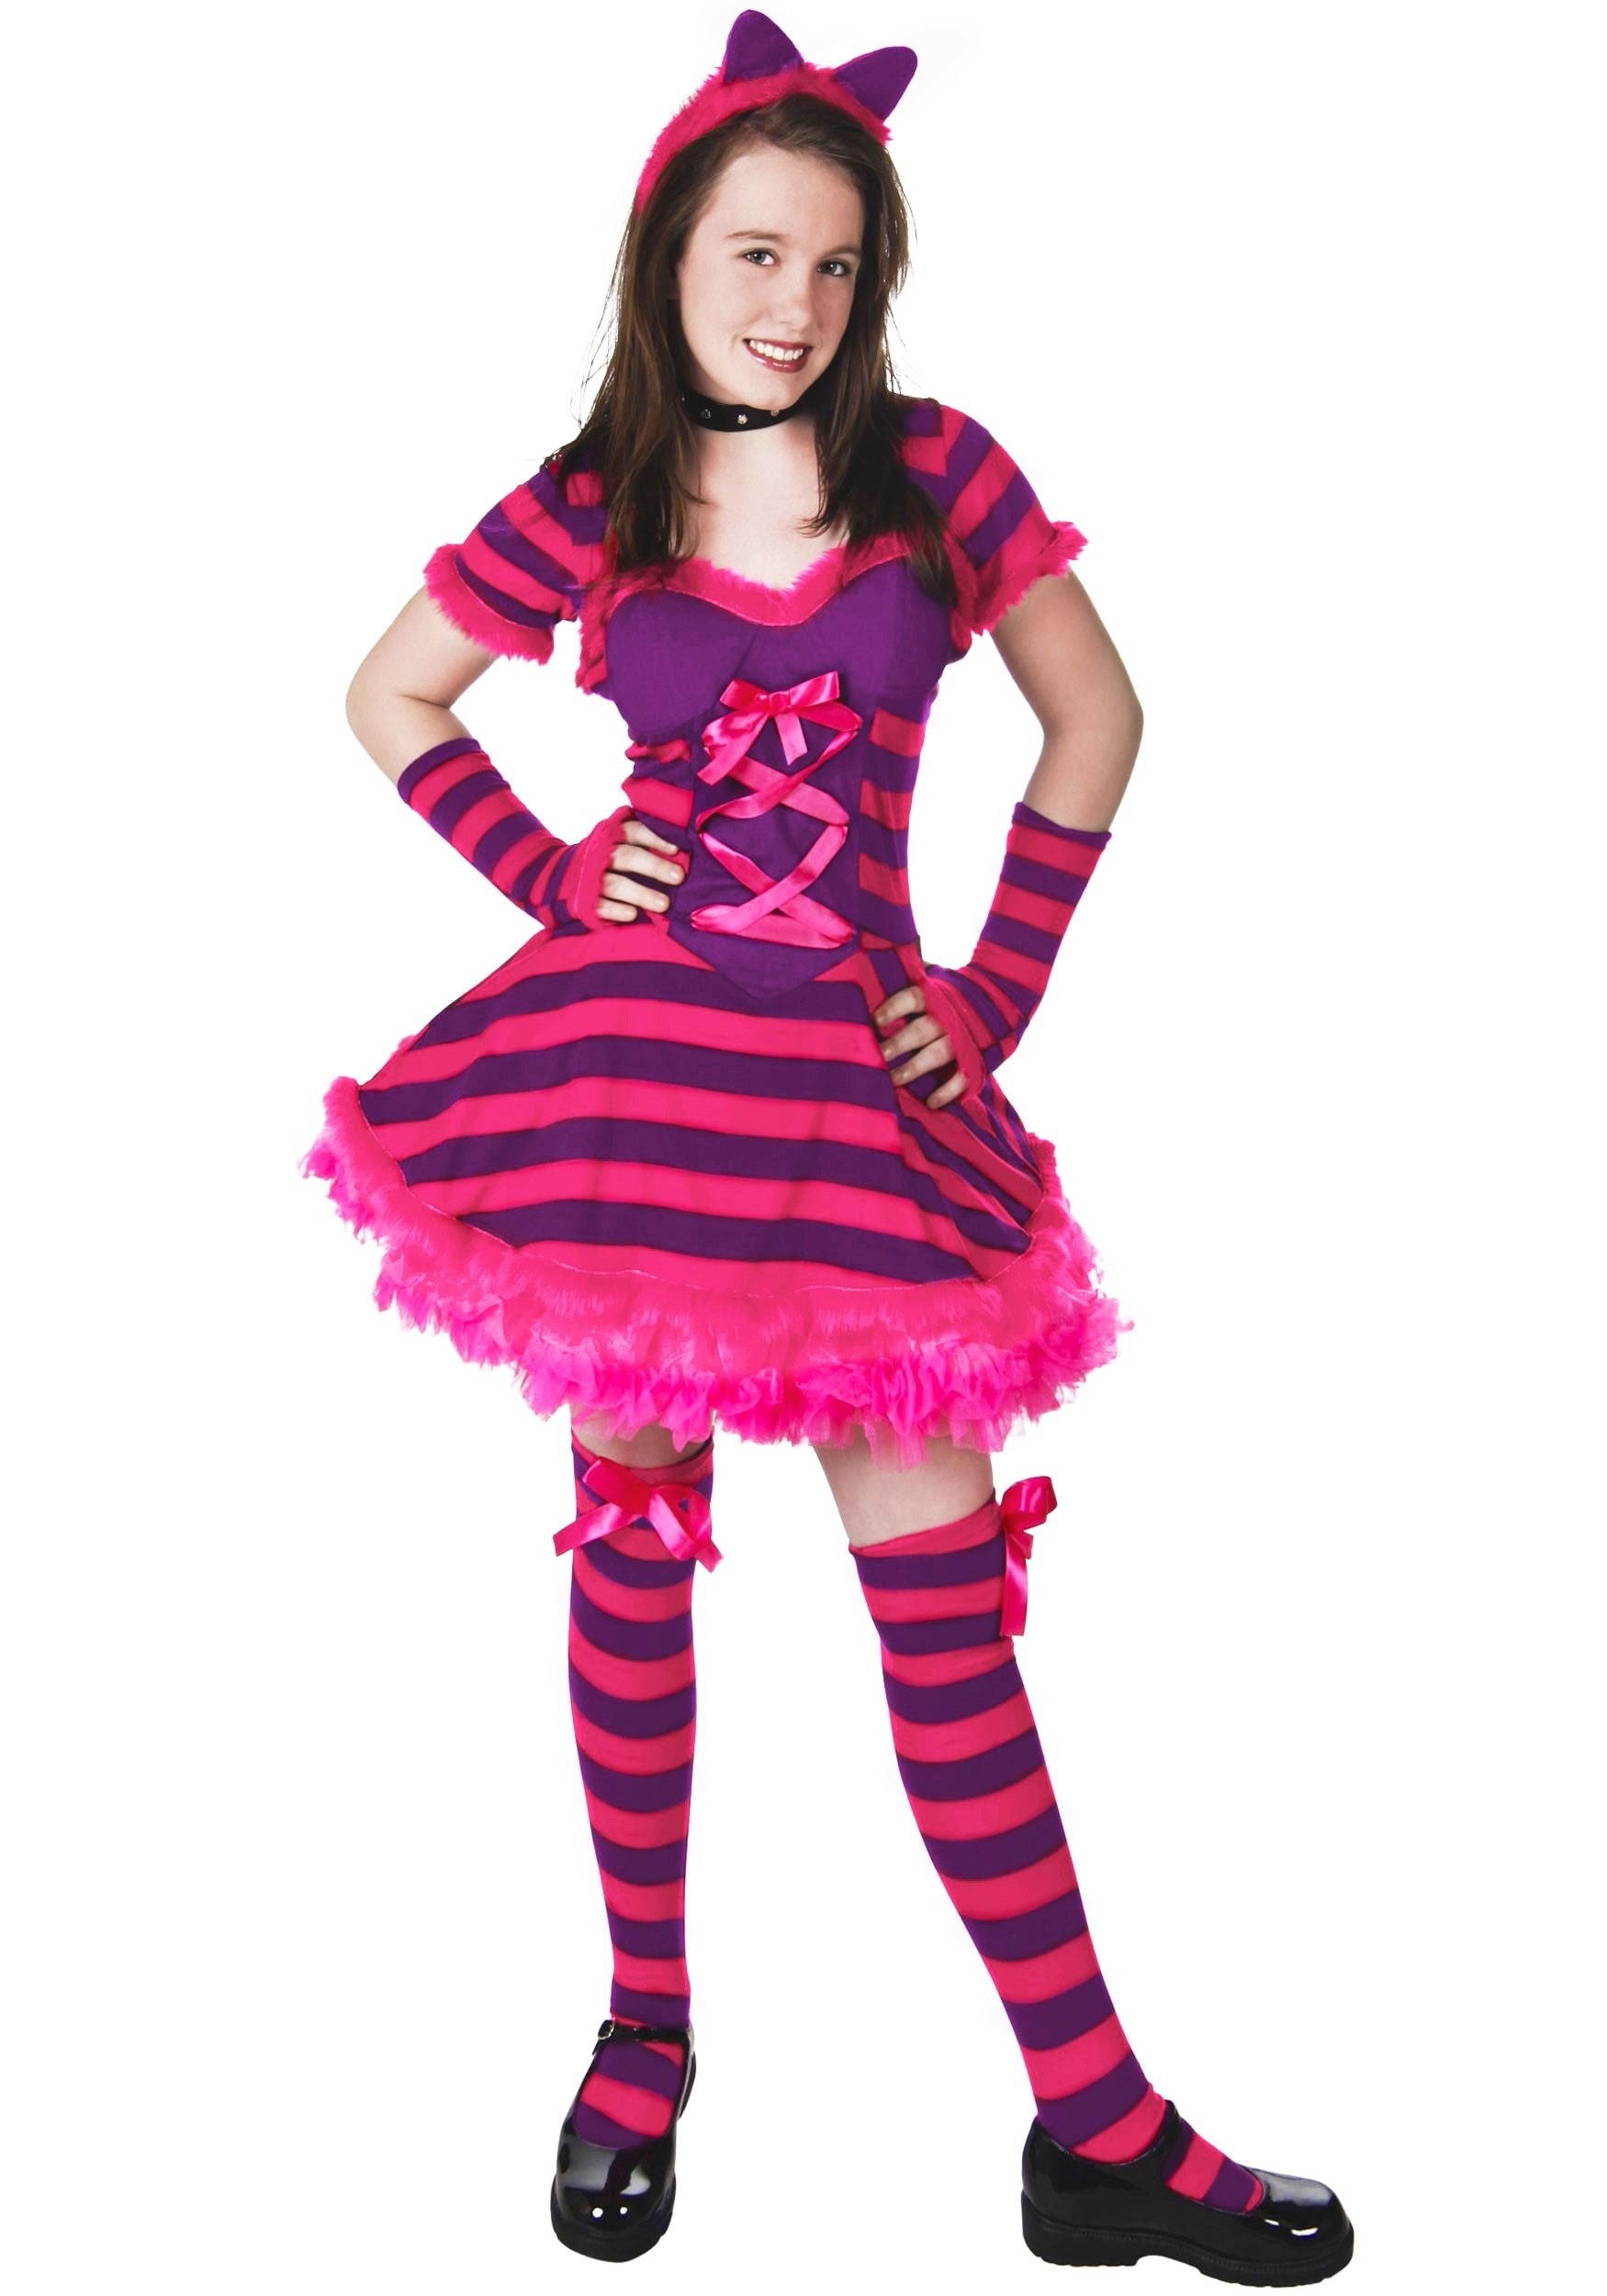 Photos - Fancy Dress Wonderland FUN Costumes Storybook Teen Cat Costume Pink FUN2064TN 